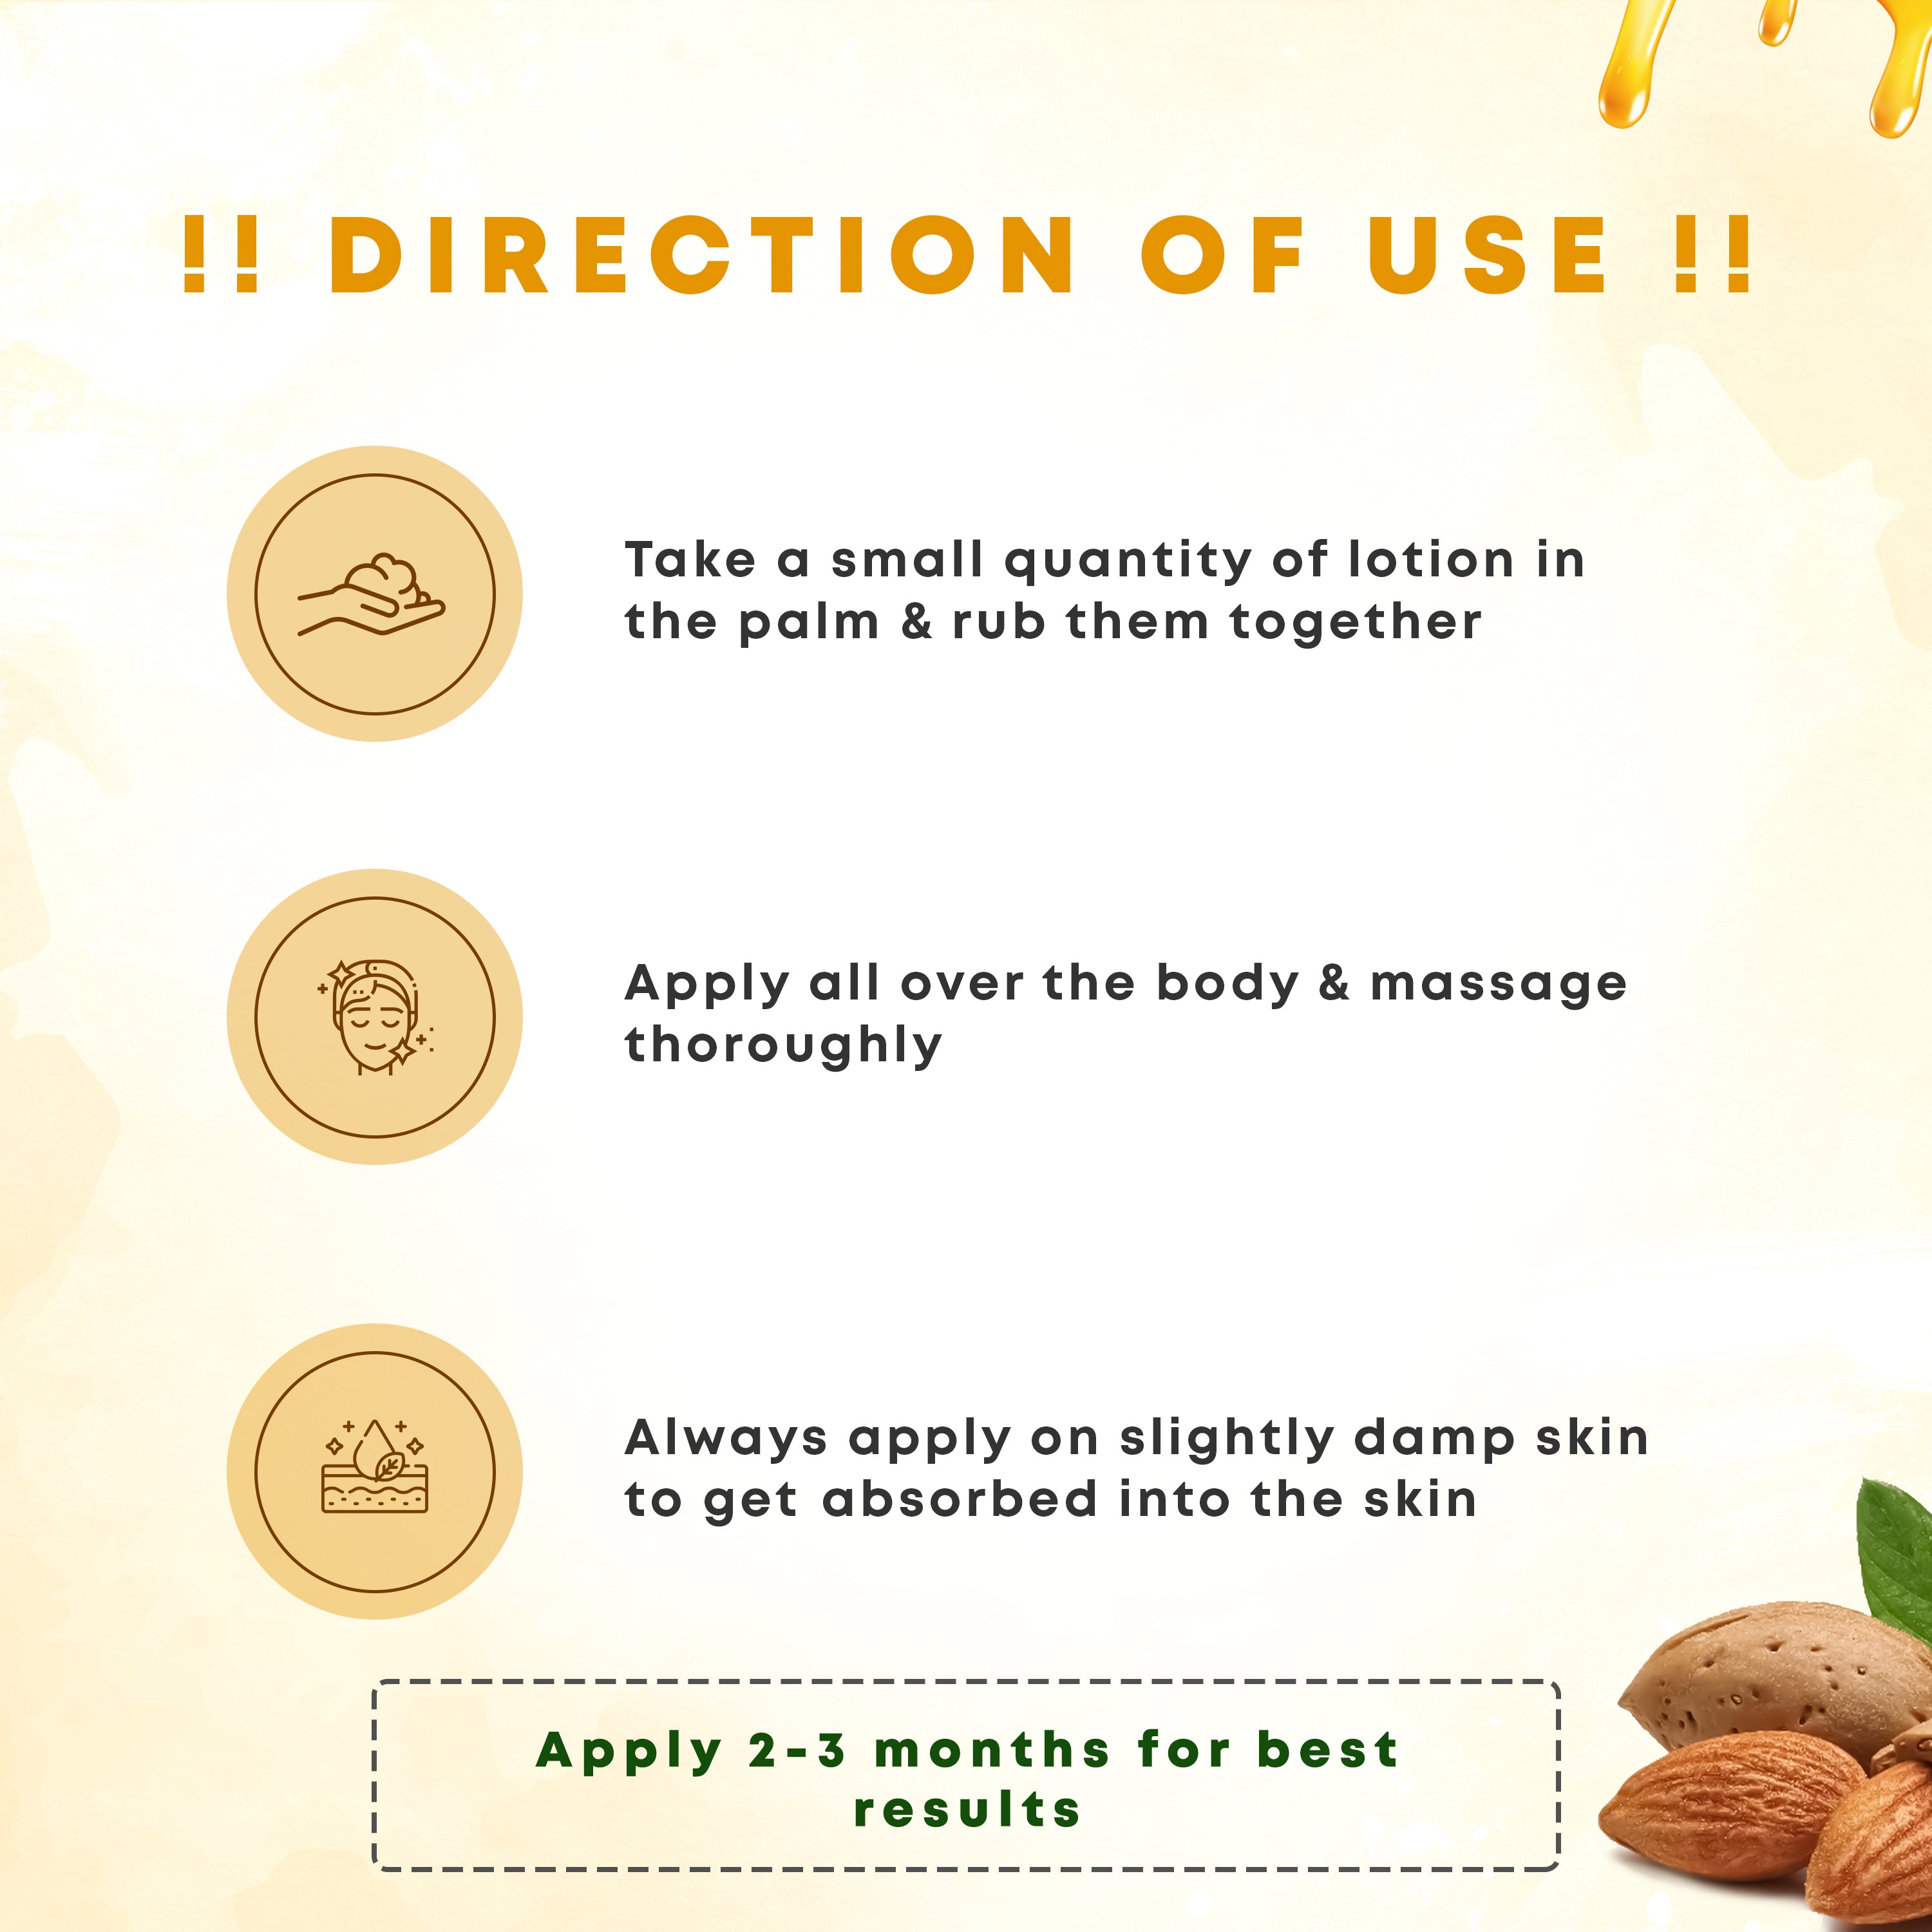 Almond & Honey Deep Nourishing Body Lotion 250ml + 250ml (Buy 1 Get 1 Free)